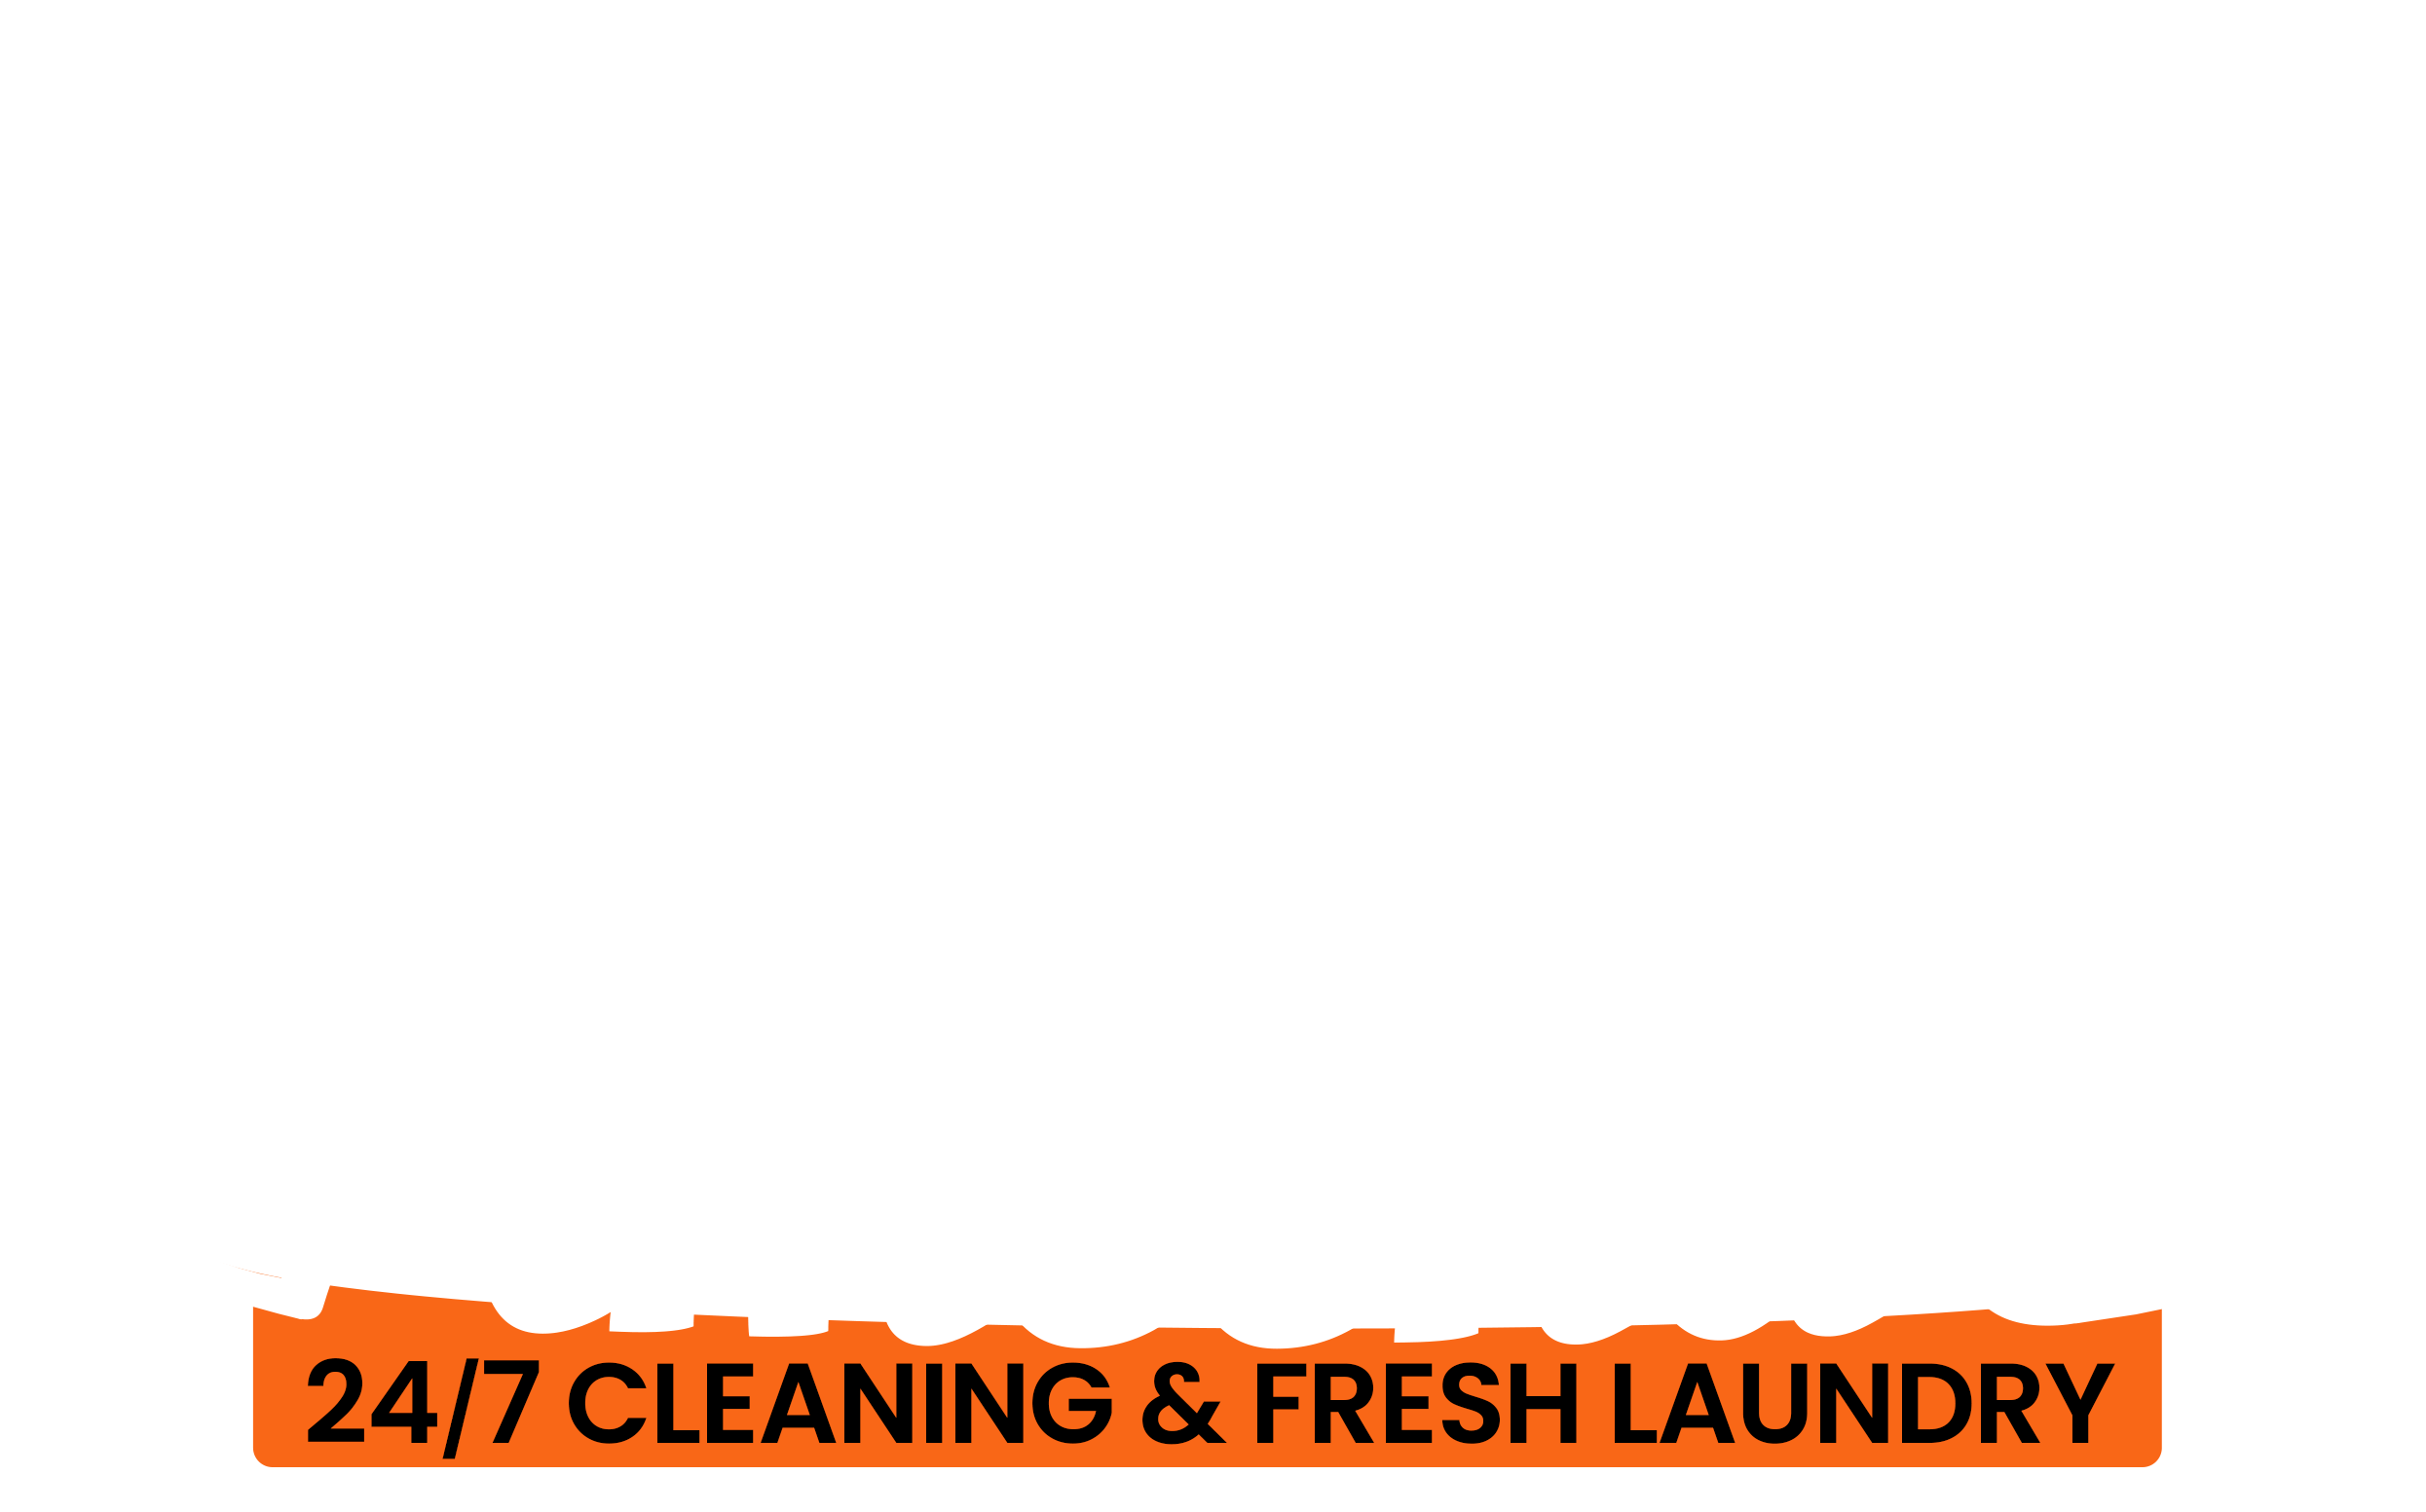 Ameena's 24/7 Cleaning & Fresh Laundry logo